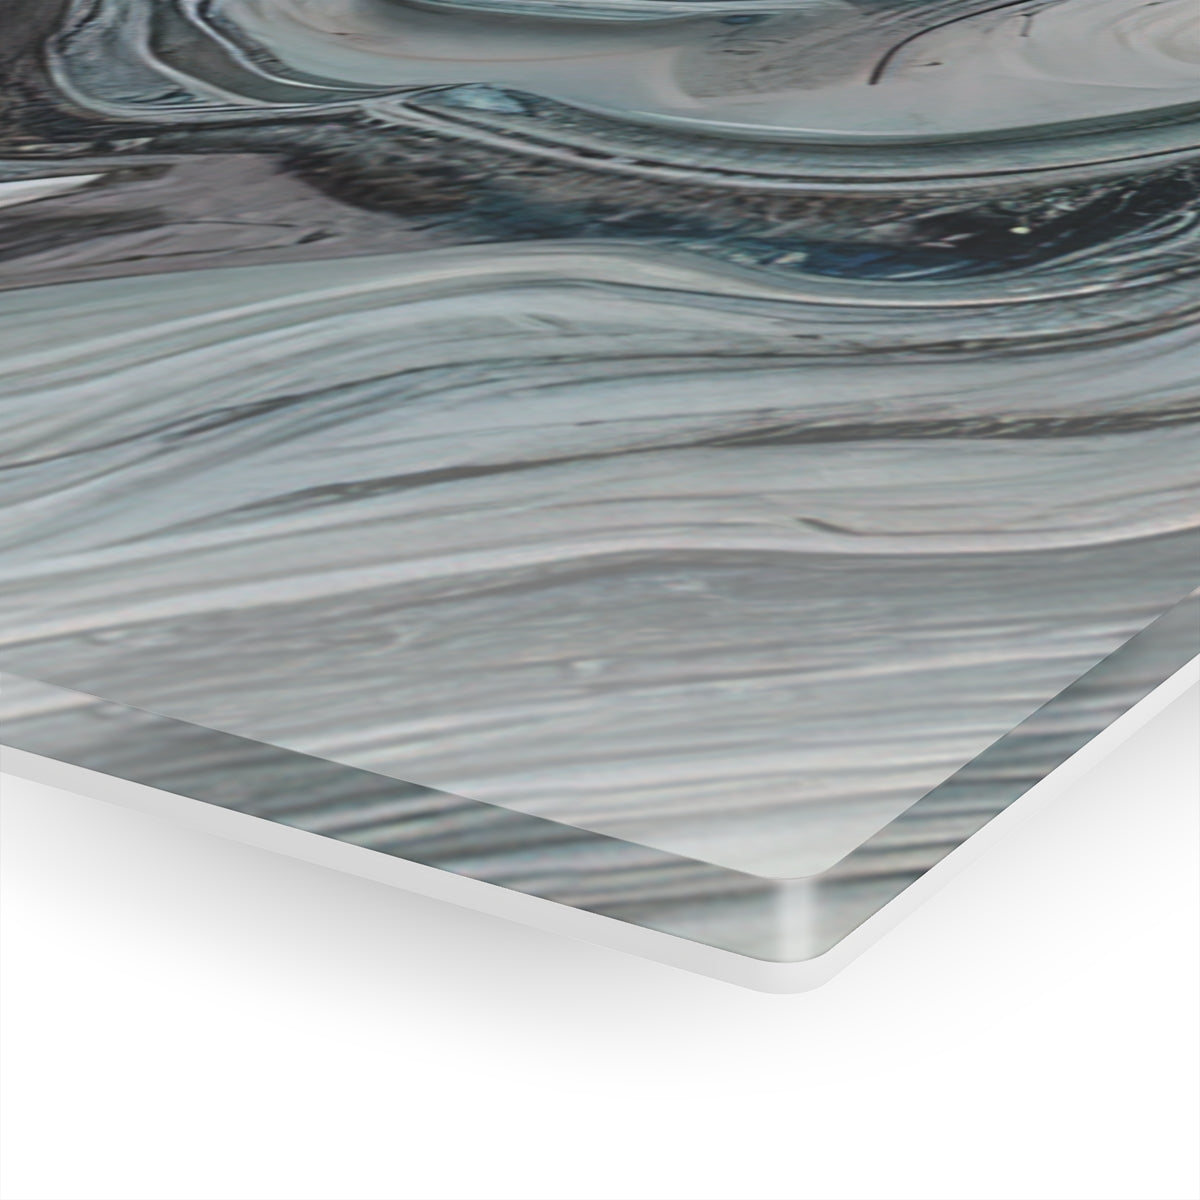 Acrylic Print | Abstract Gray Marble